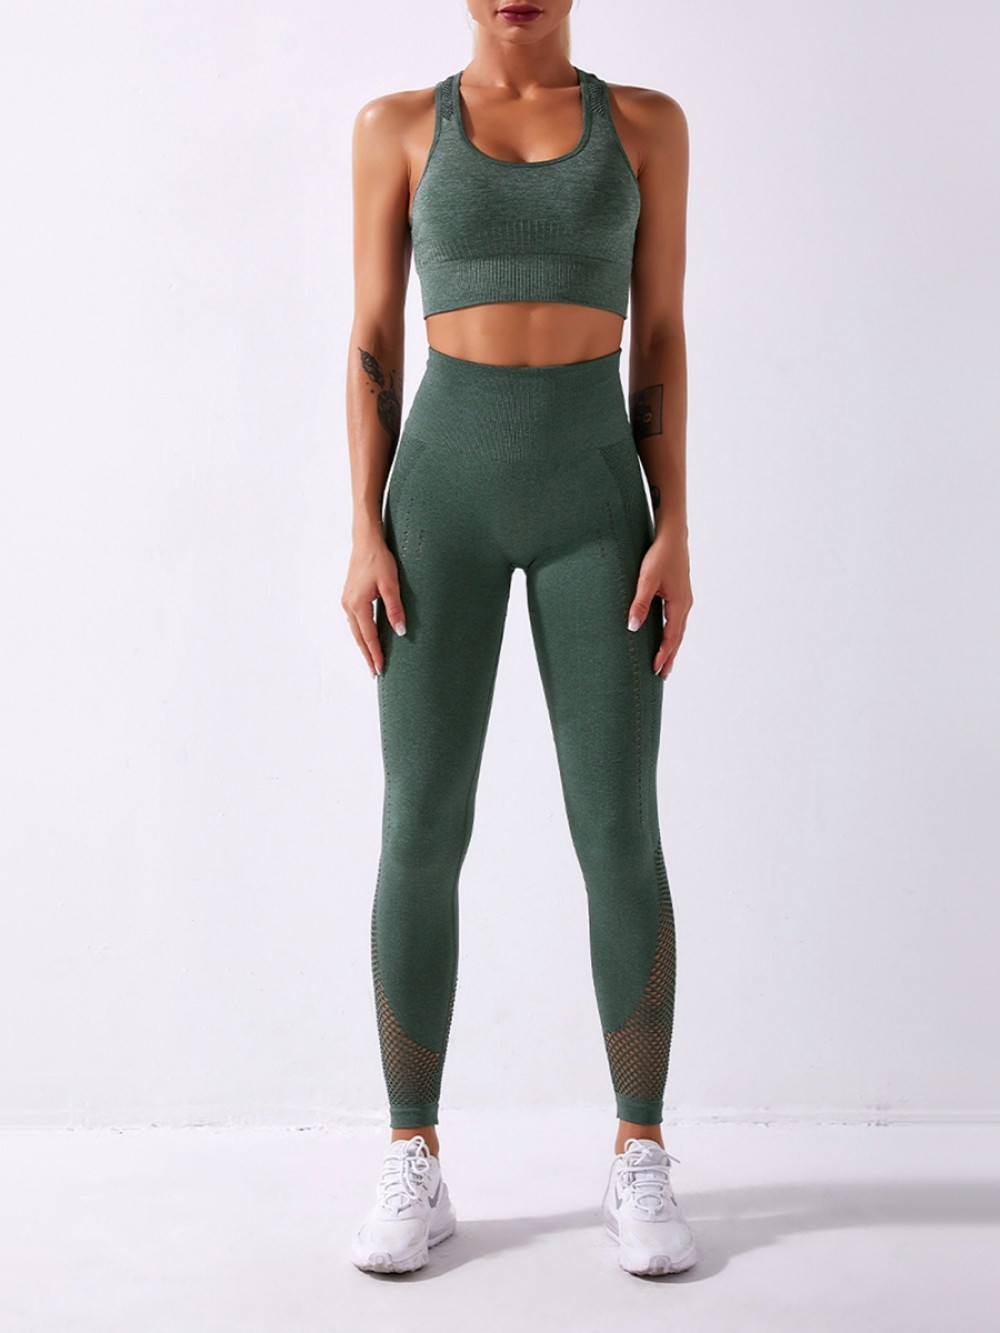 Blackish Green Wide Straps Yoga Bra Seamless Legging Suit For Girls